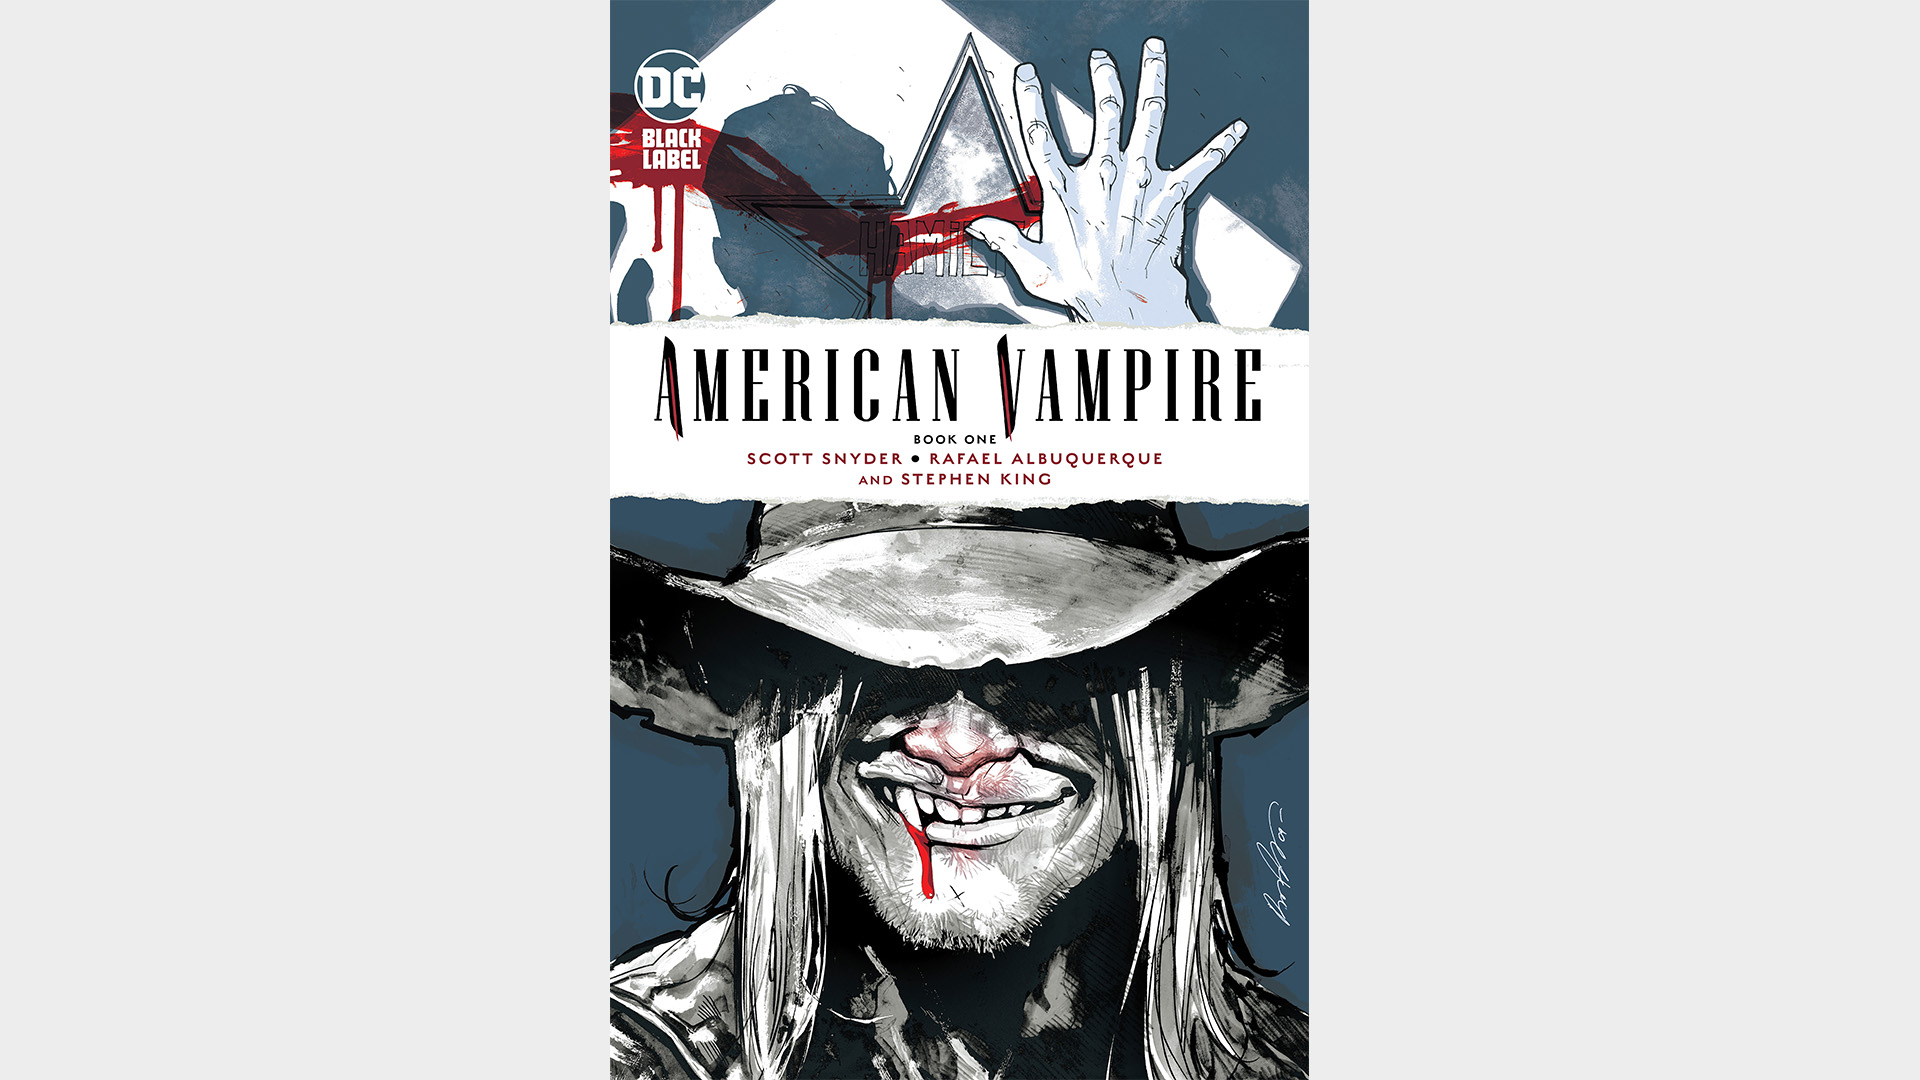 AMERICAN VAMPIRE BOOK ONE